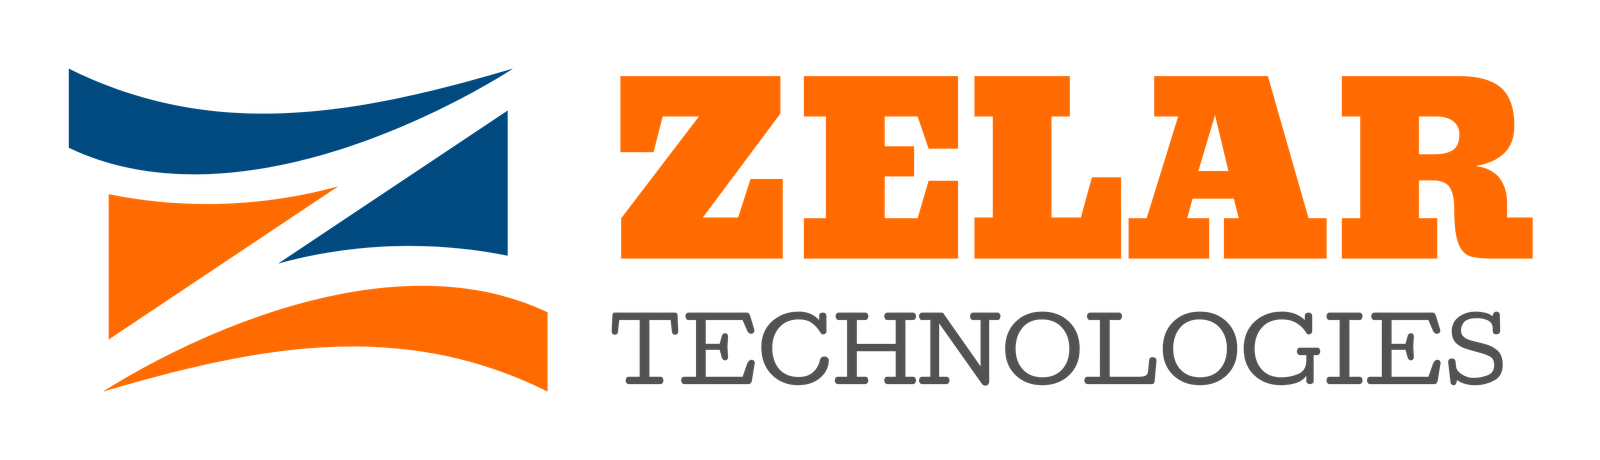 Zelar Technologies